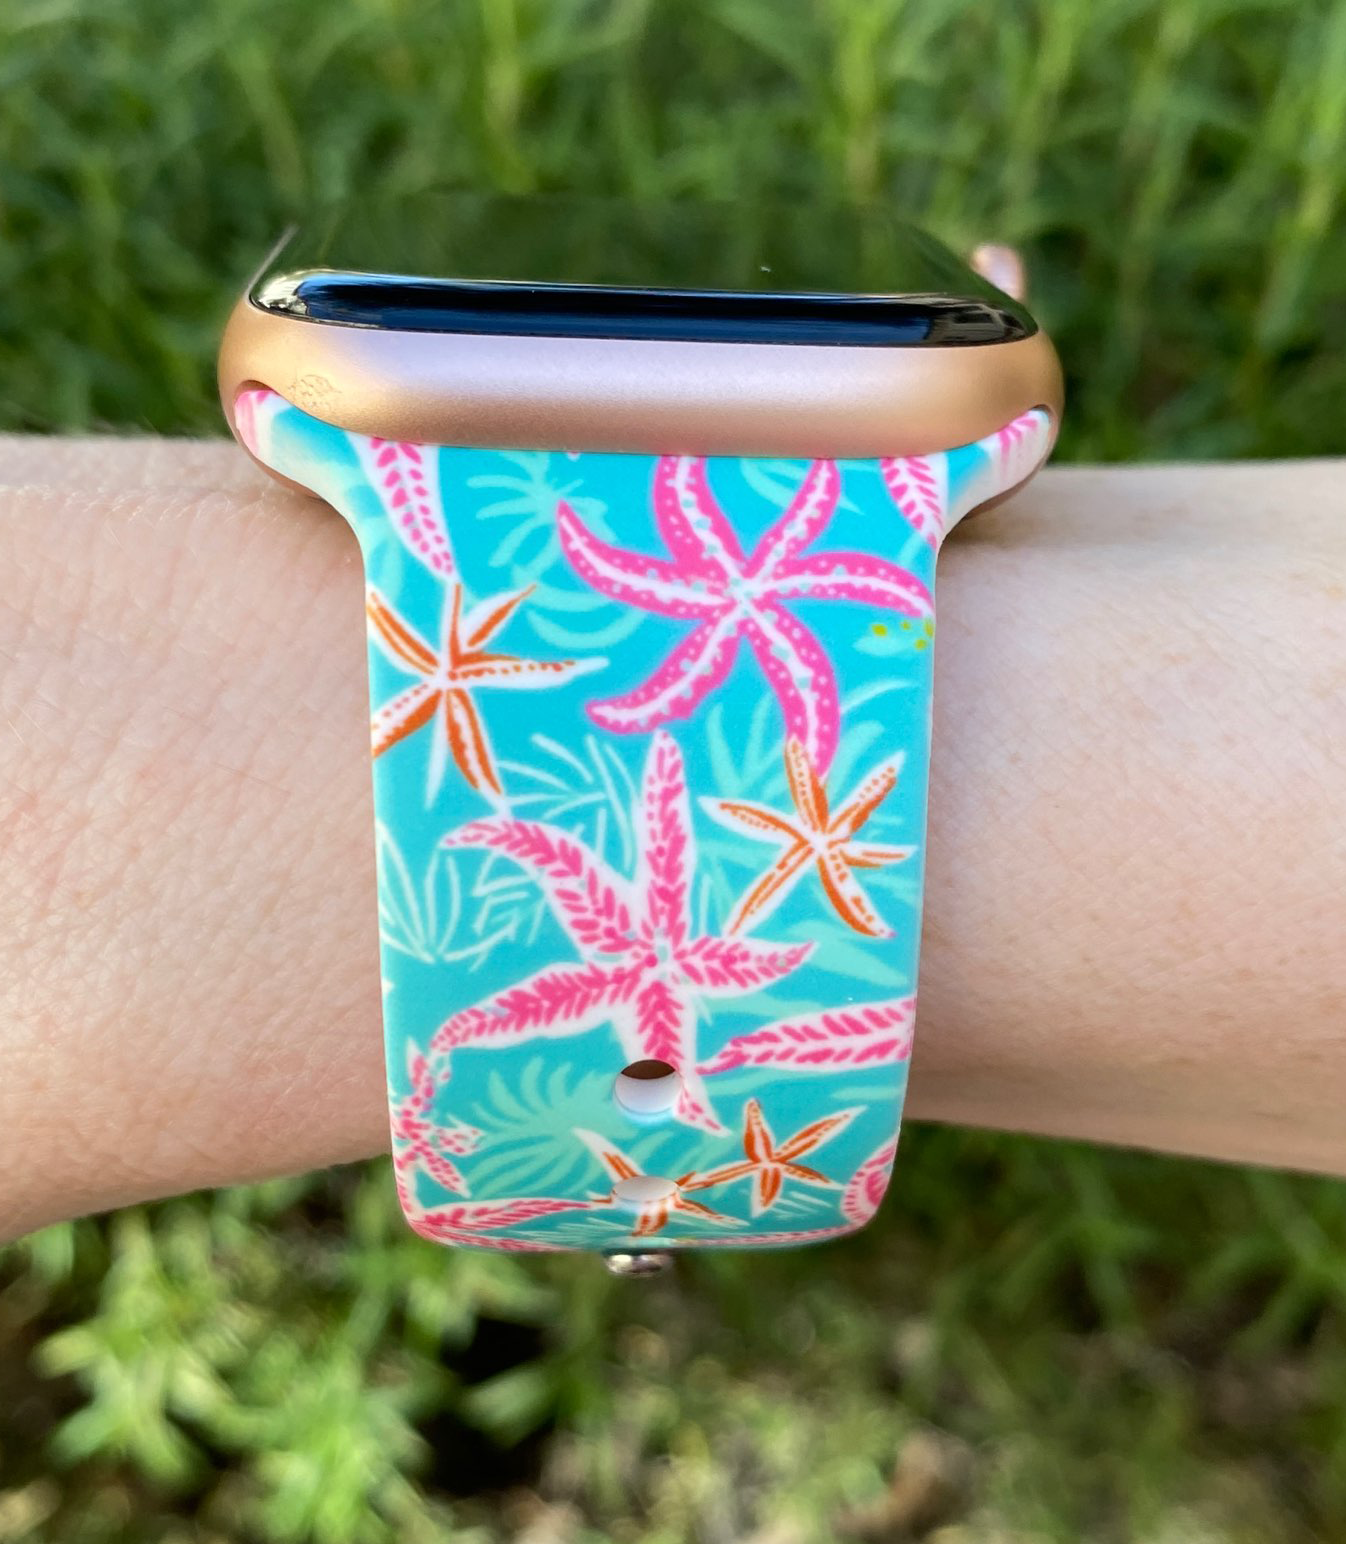 Starfish Apple Watch Band